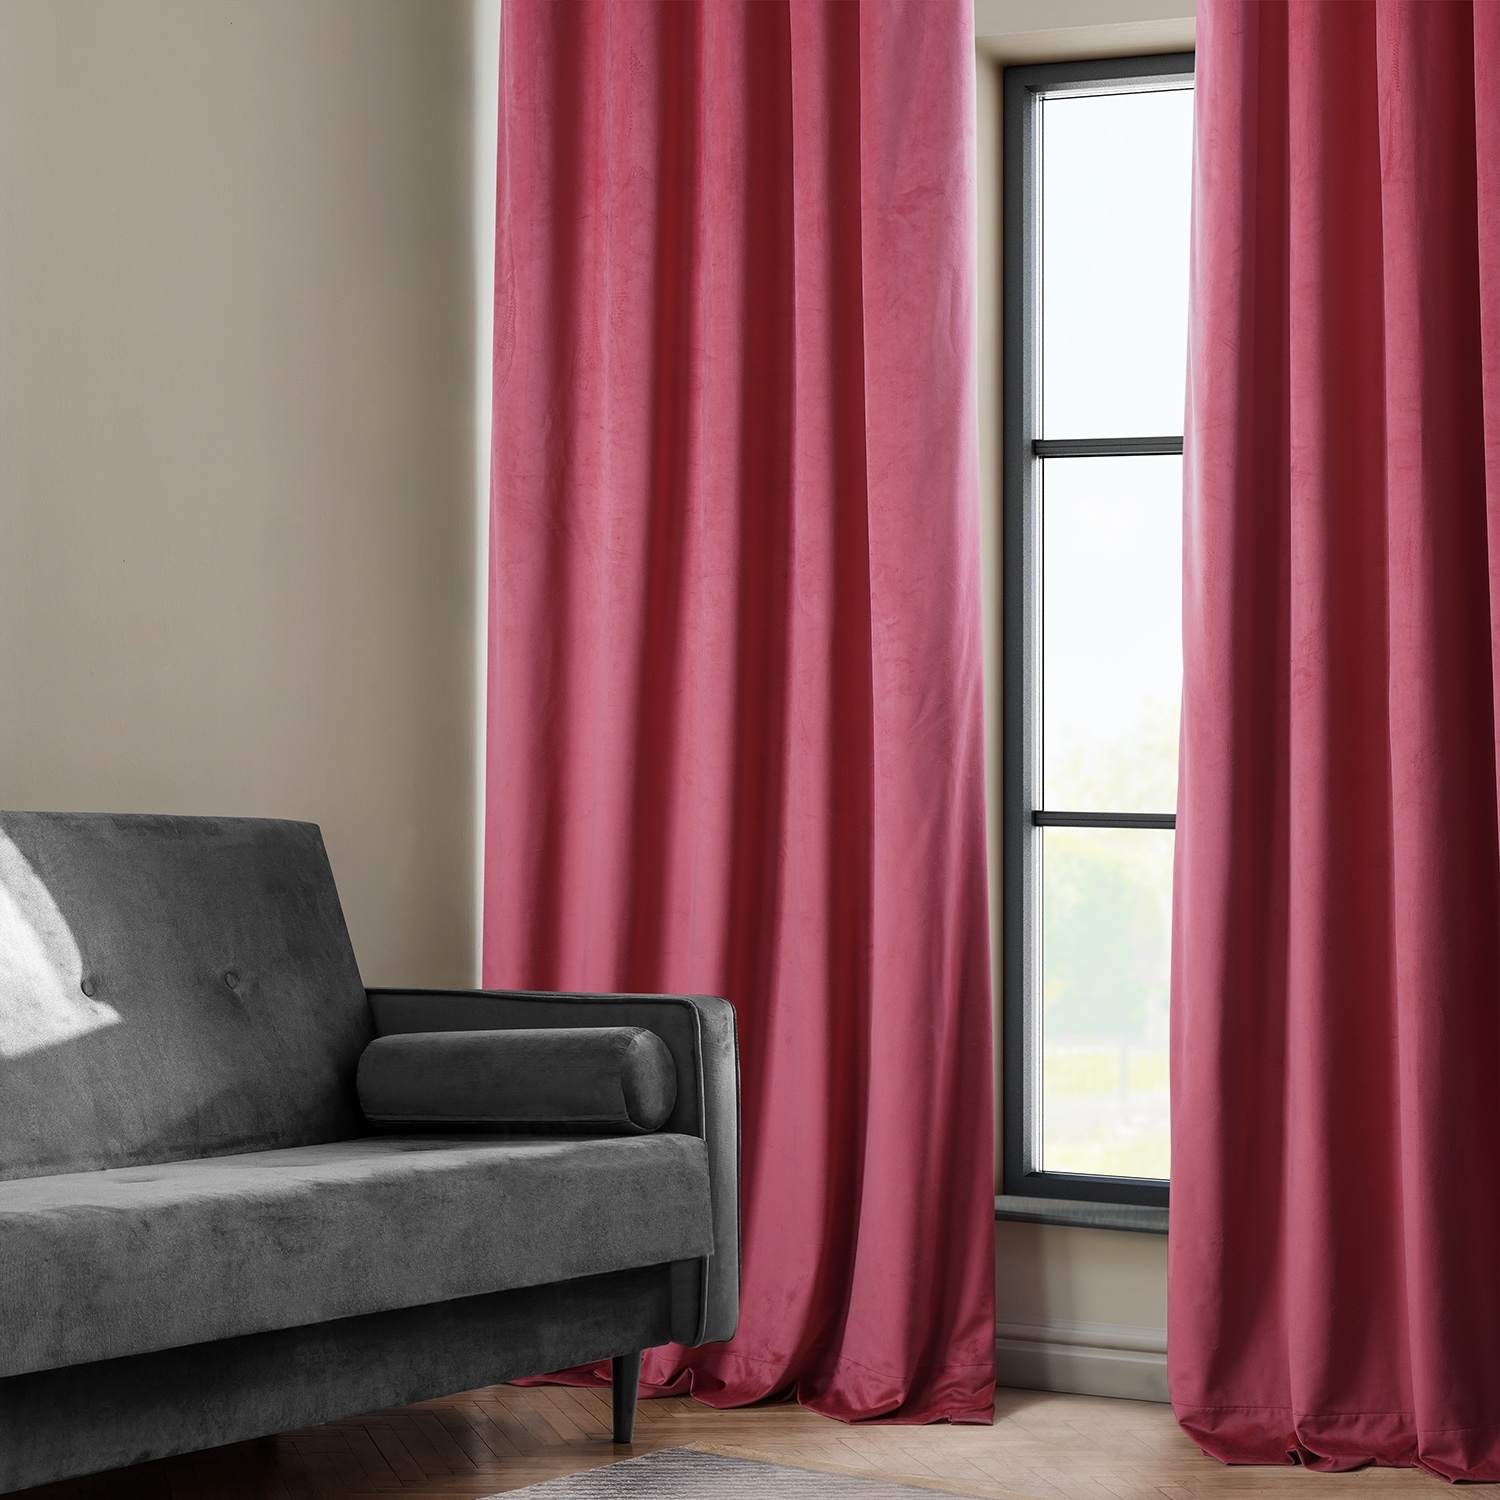 https://ak1.ostkcdn.com/images/products/is/images/direct/4f45557ec61dd0dfa75107996ab57aa13881e6e3/Exclusive-Fabrics-Heritage-Plush-Velvet-Curtain-%281-Panel%29.jpg